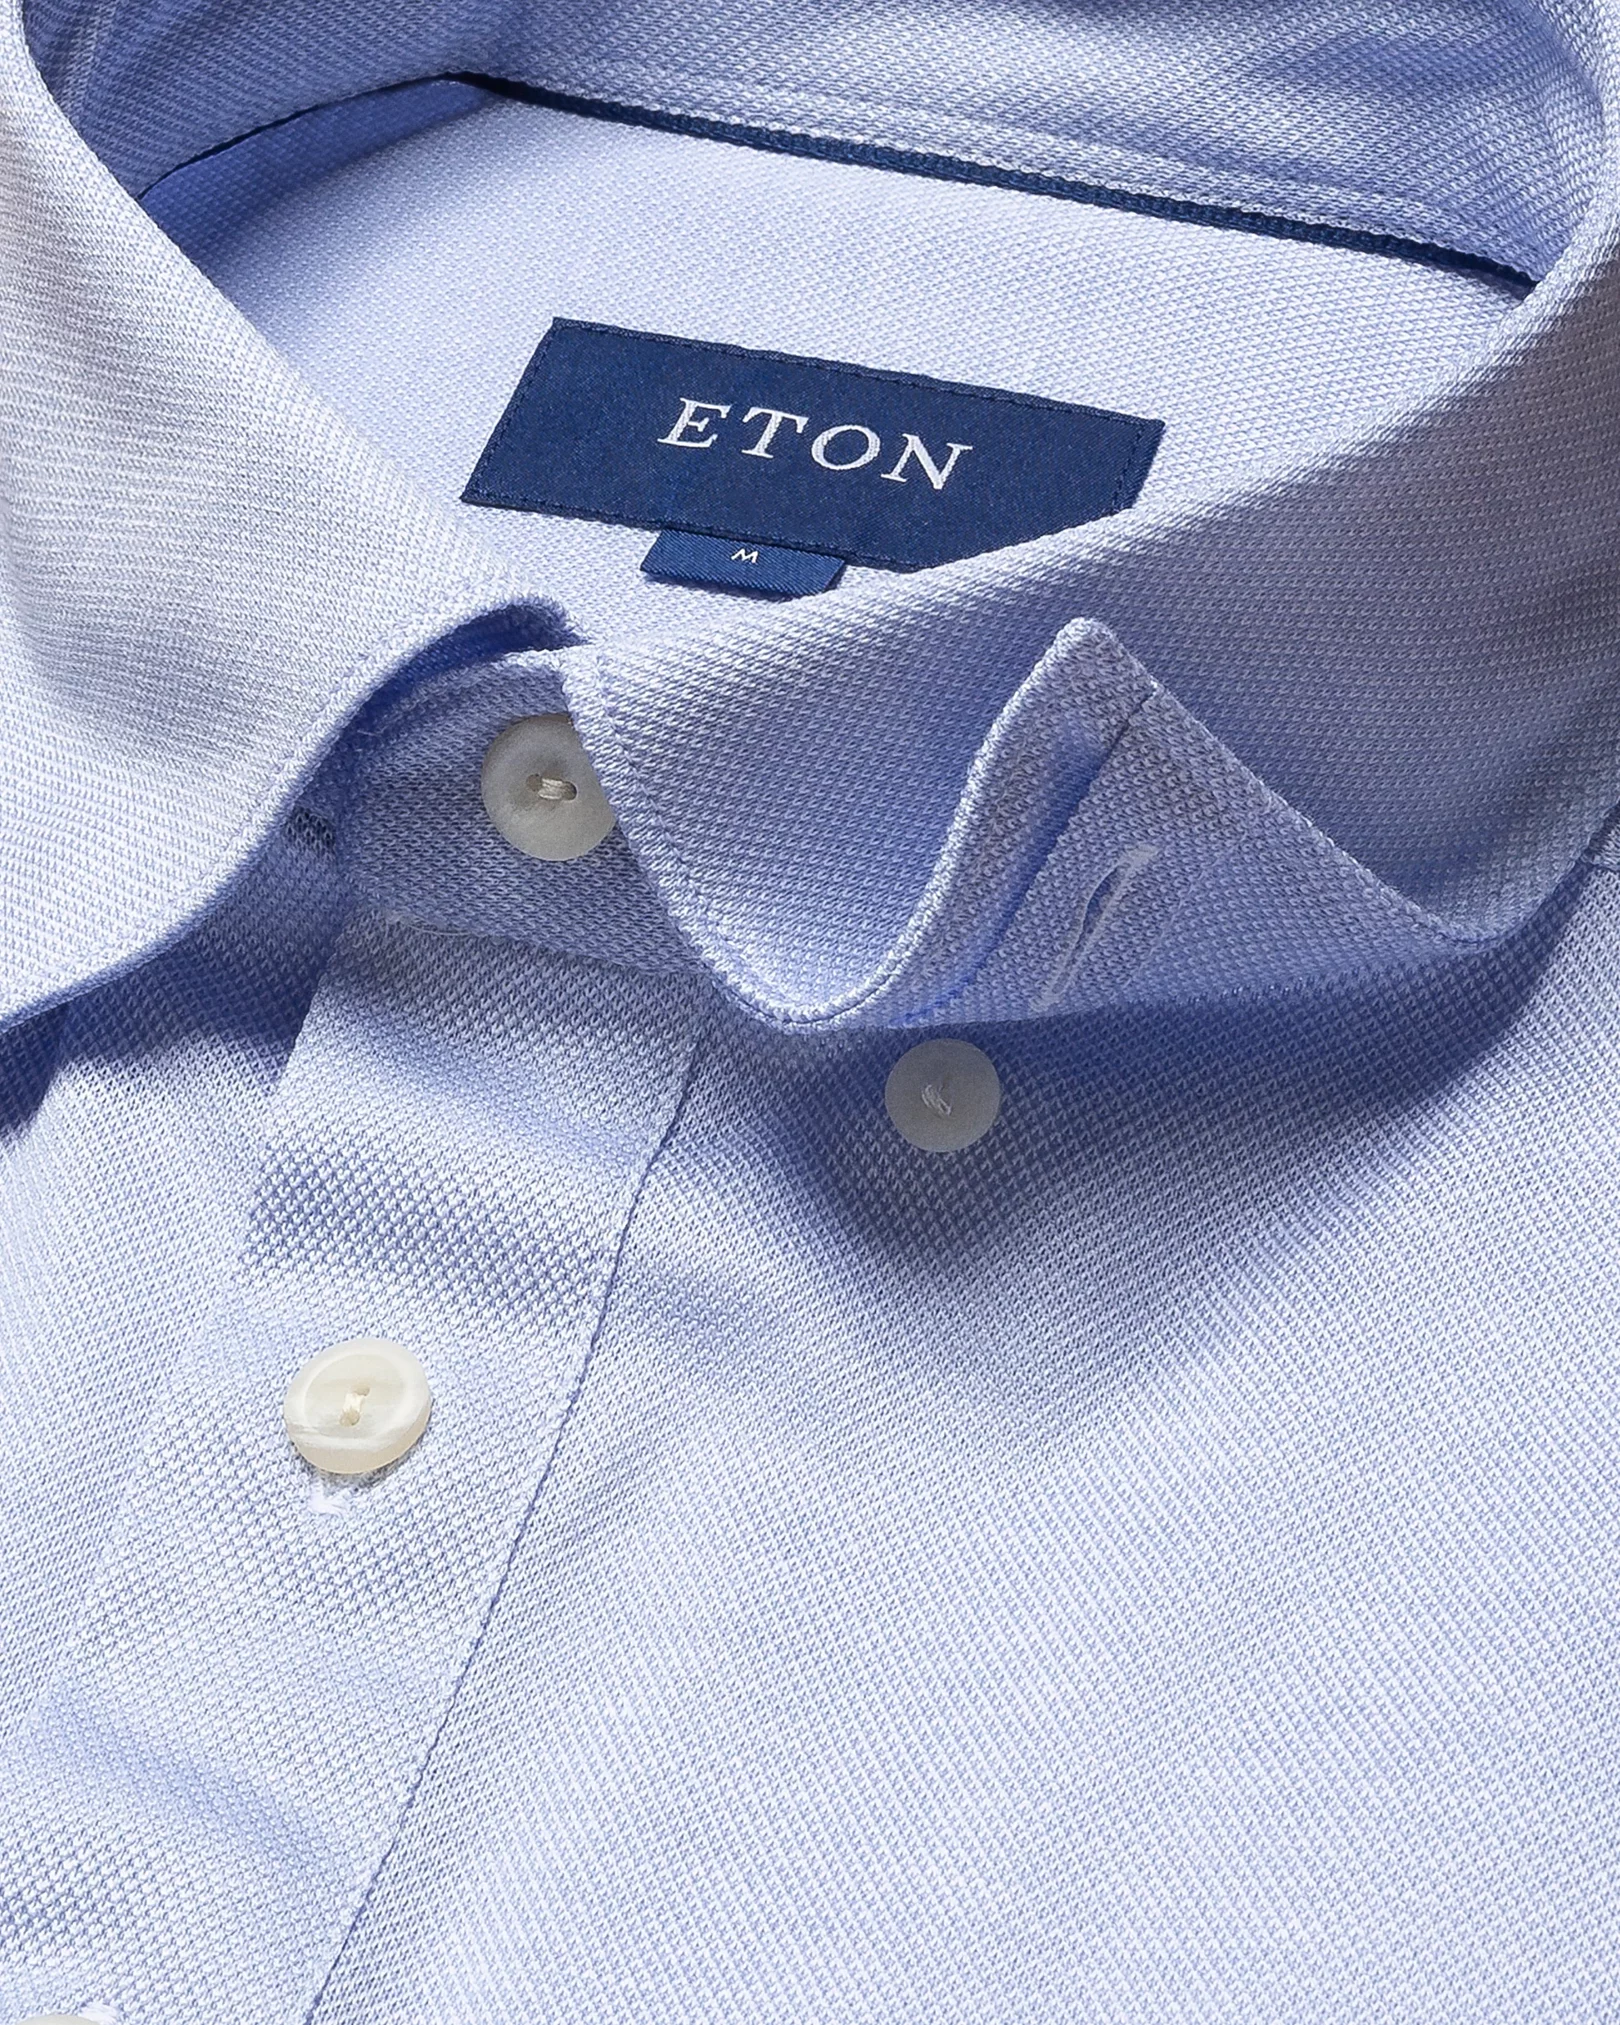 Eton - light blue jersey button under